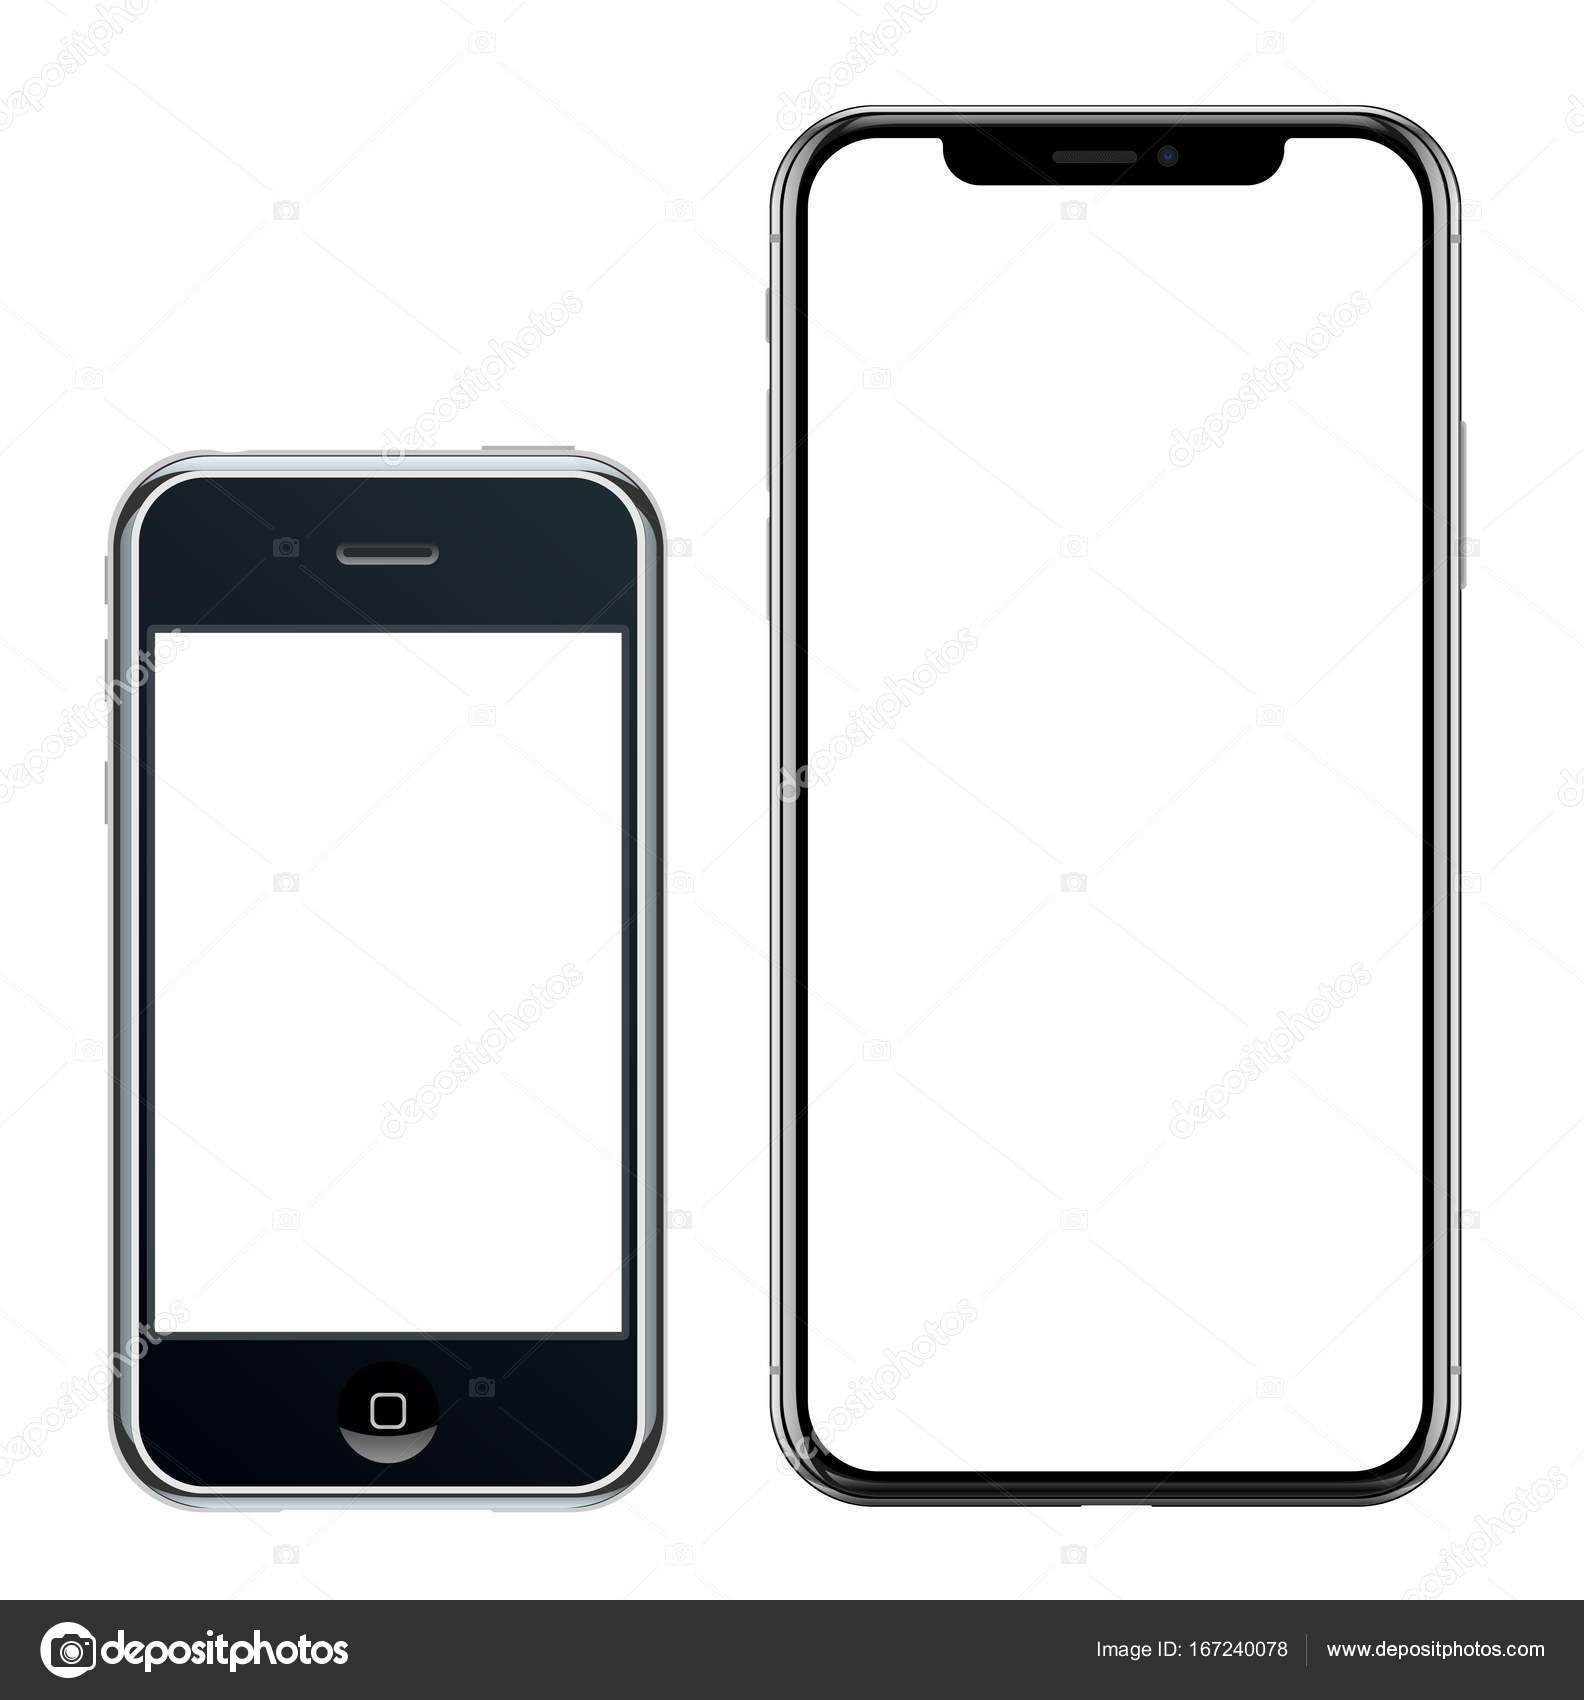 Black Smartphone In Apple Iphone And Iphone X Vector Image By C Leonardo255 Vector Stock